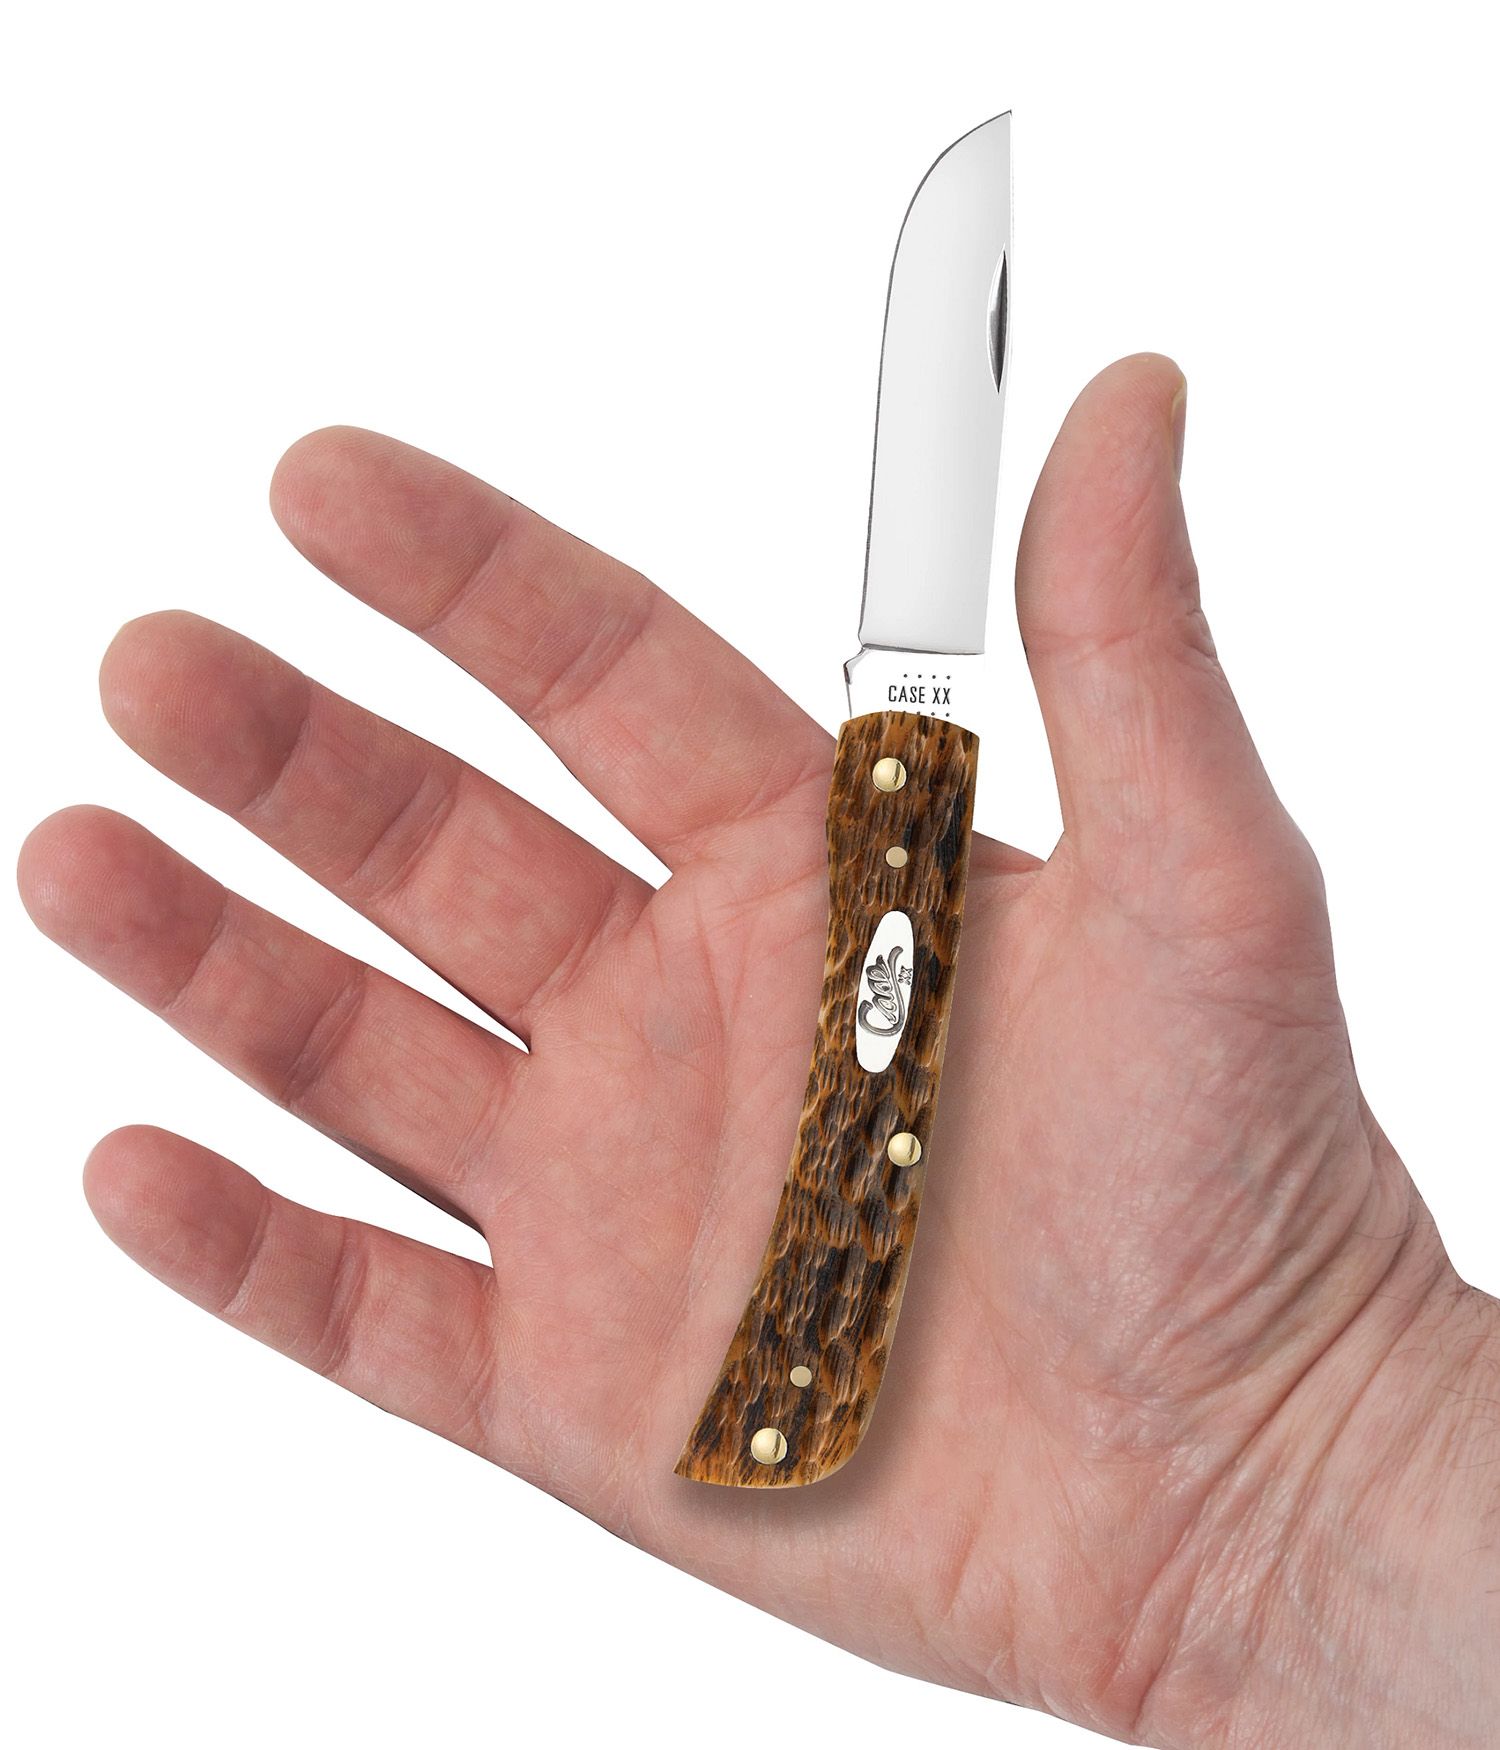 Case Sod Buster Jr Amber Jigged Bone, 30092, 6137 CV pocket knife